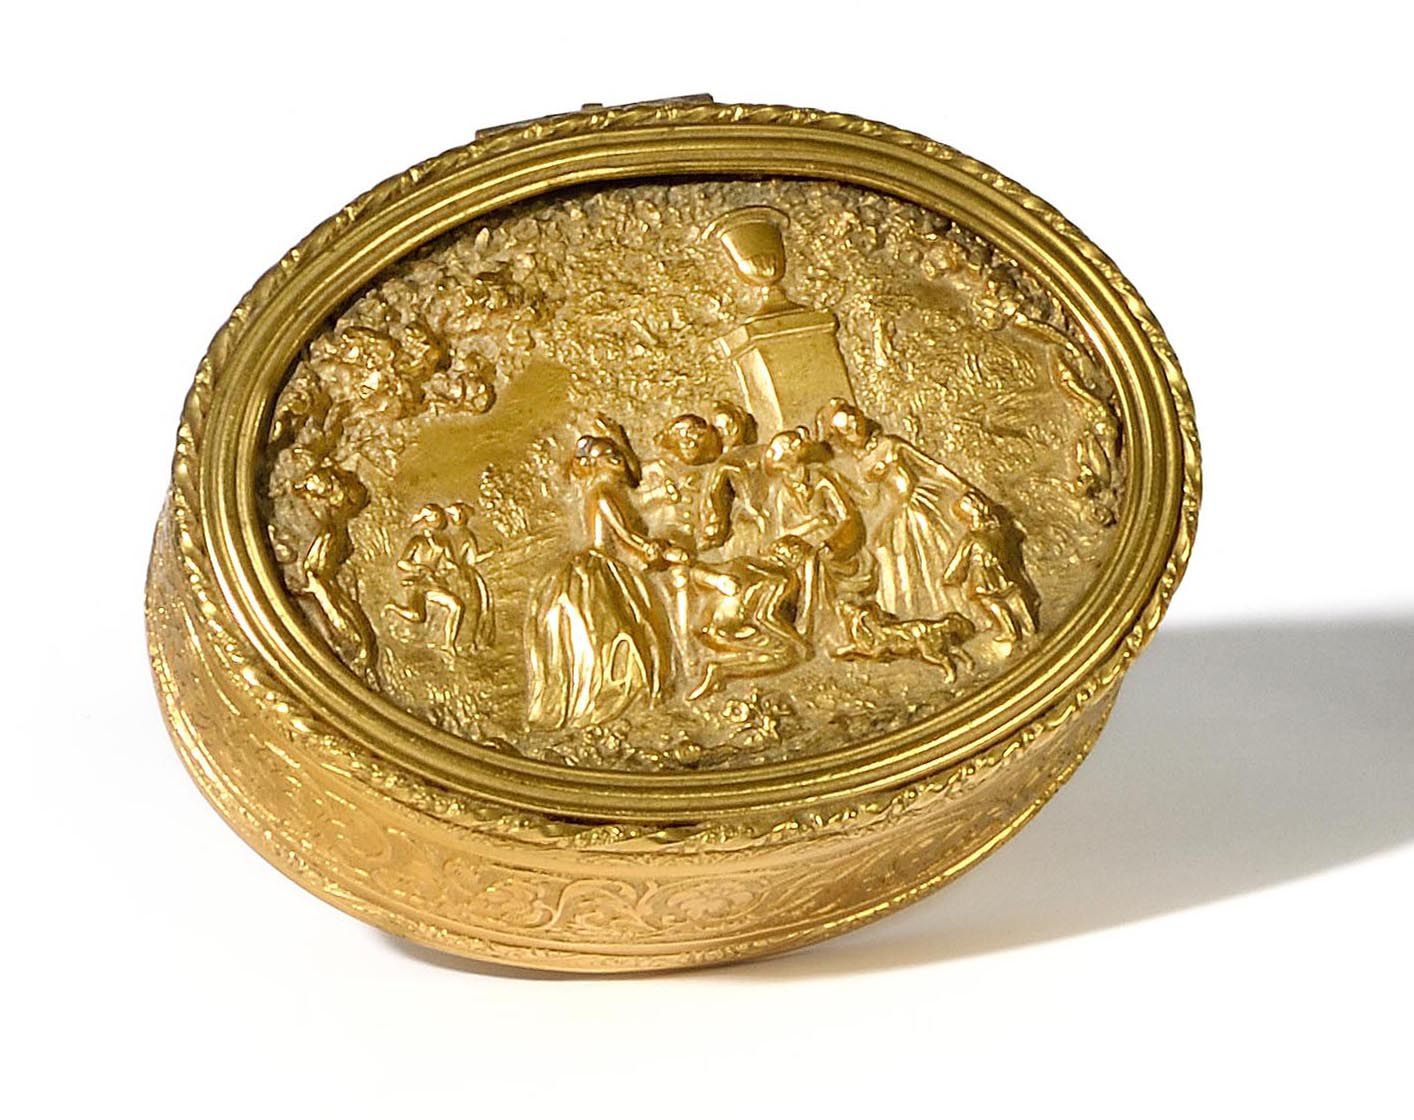 Null 椭圆形的镀金金属盒，周边装饰有花纹，盒盖上呈现出一个英勇的场景。19世纪的作品。高3.8厘米 - 宽10.5厘米 - 深8.5厘米